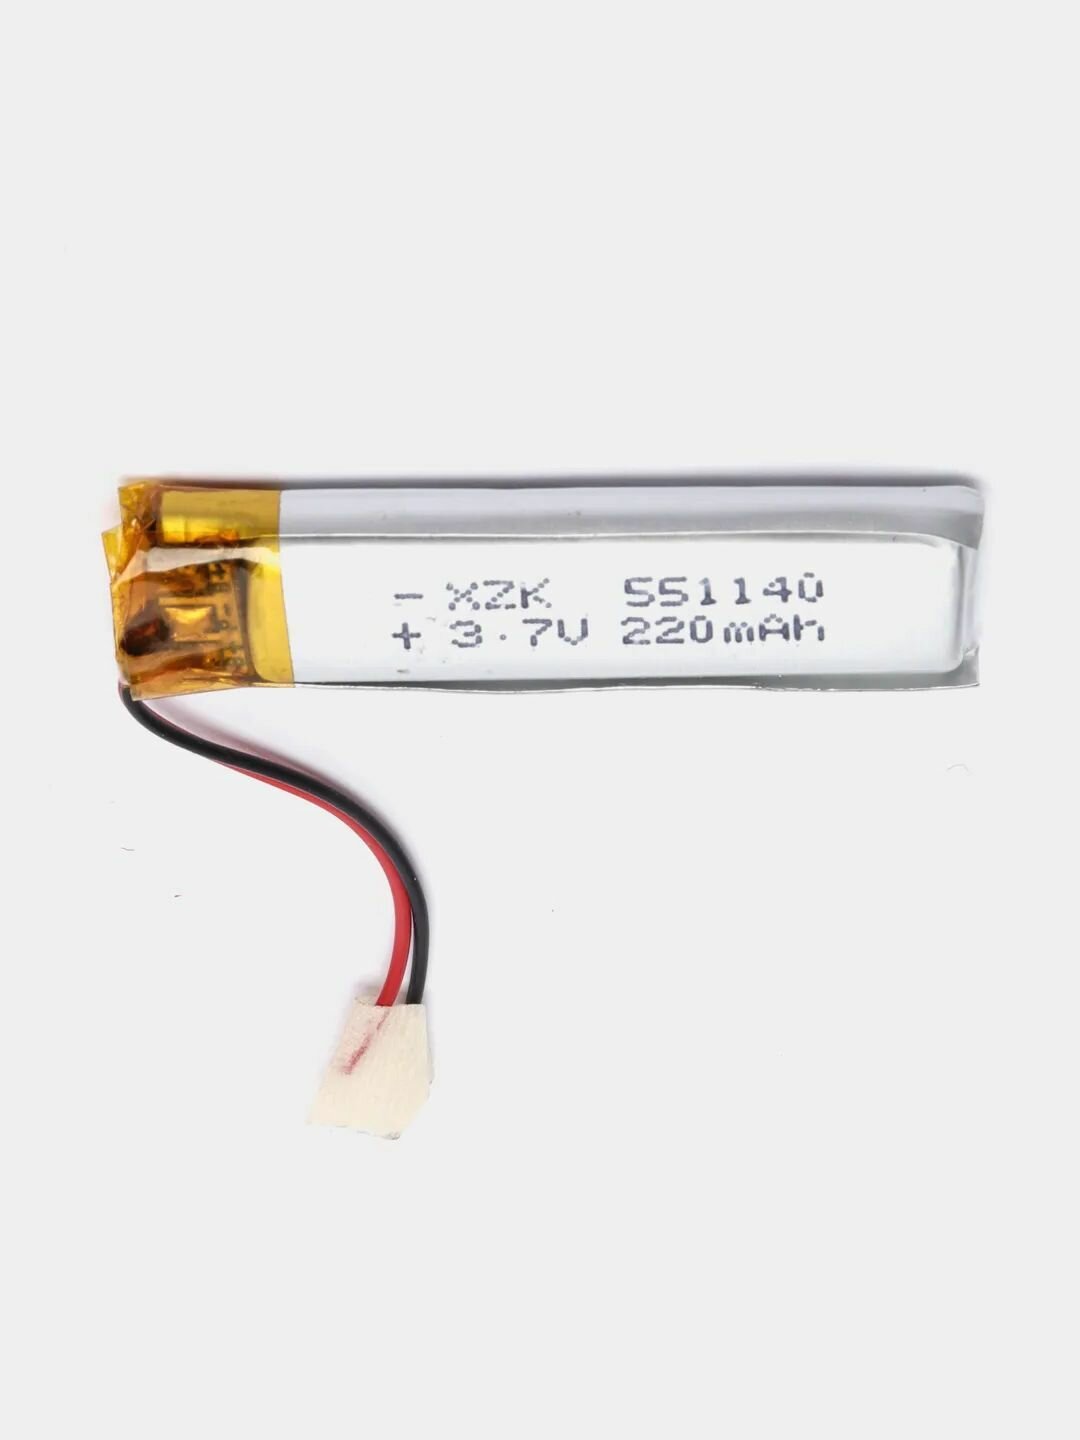 Аккумулятор Li-Pol 2pin 3.7V/220mAh, 551140 (батарея) 55х11х40 мм (Ф)